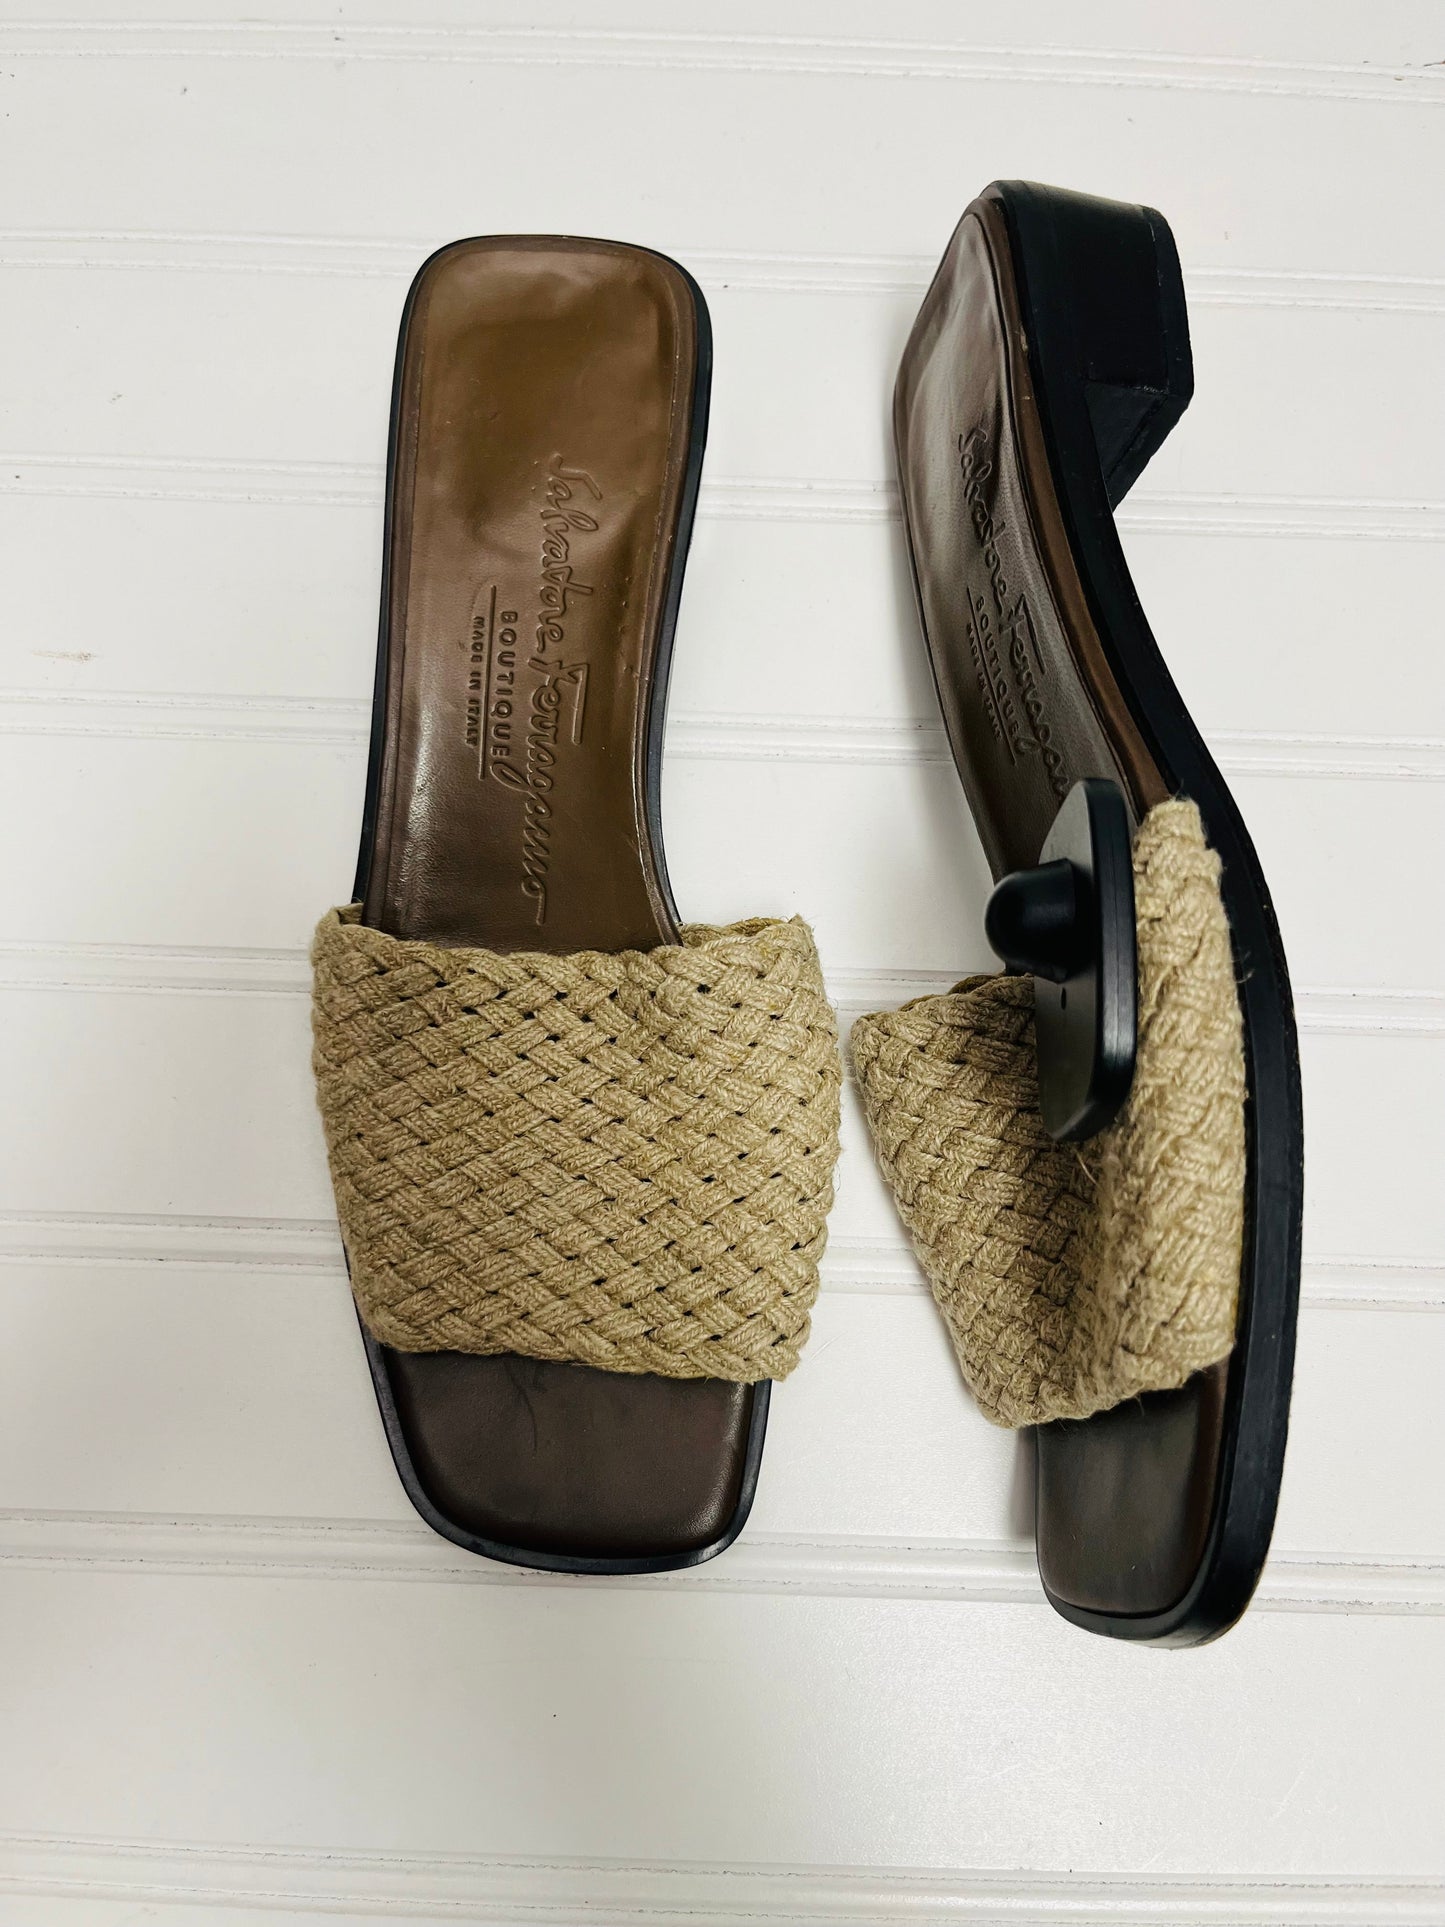 Brown Sandals Designer Ferragamo, Size 6.5